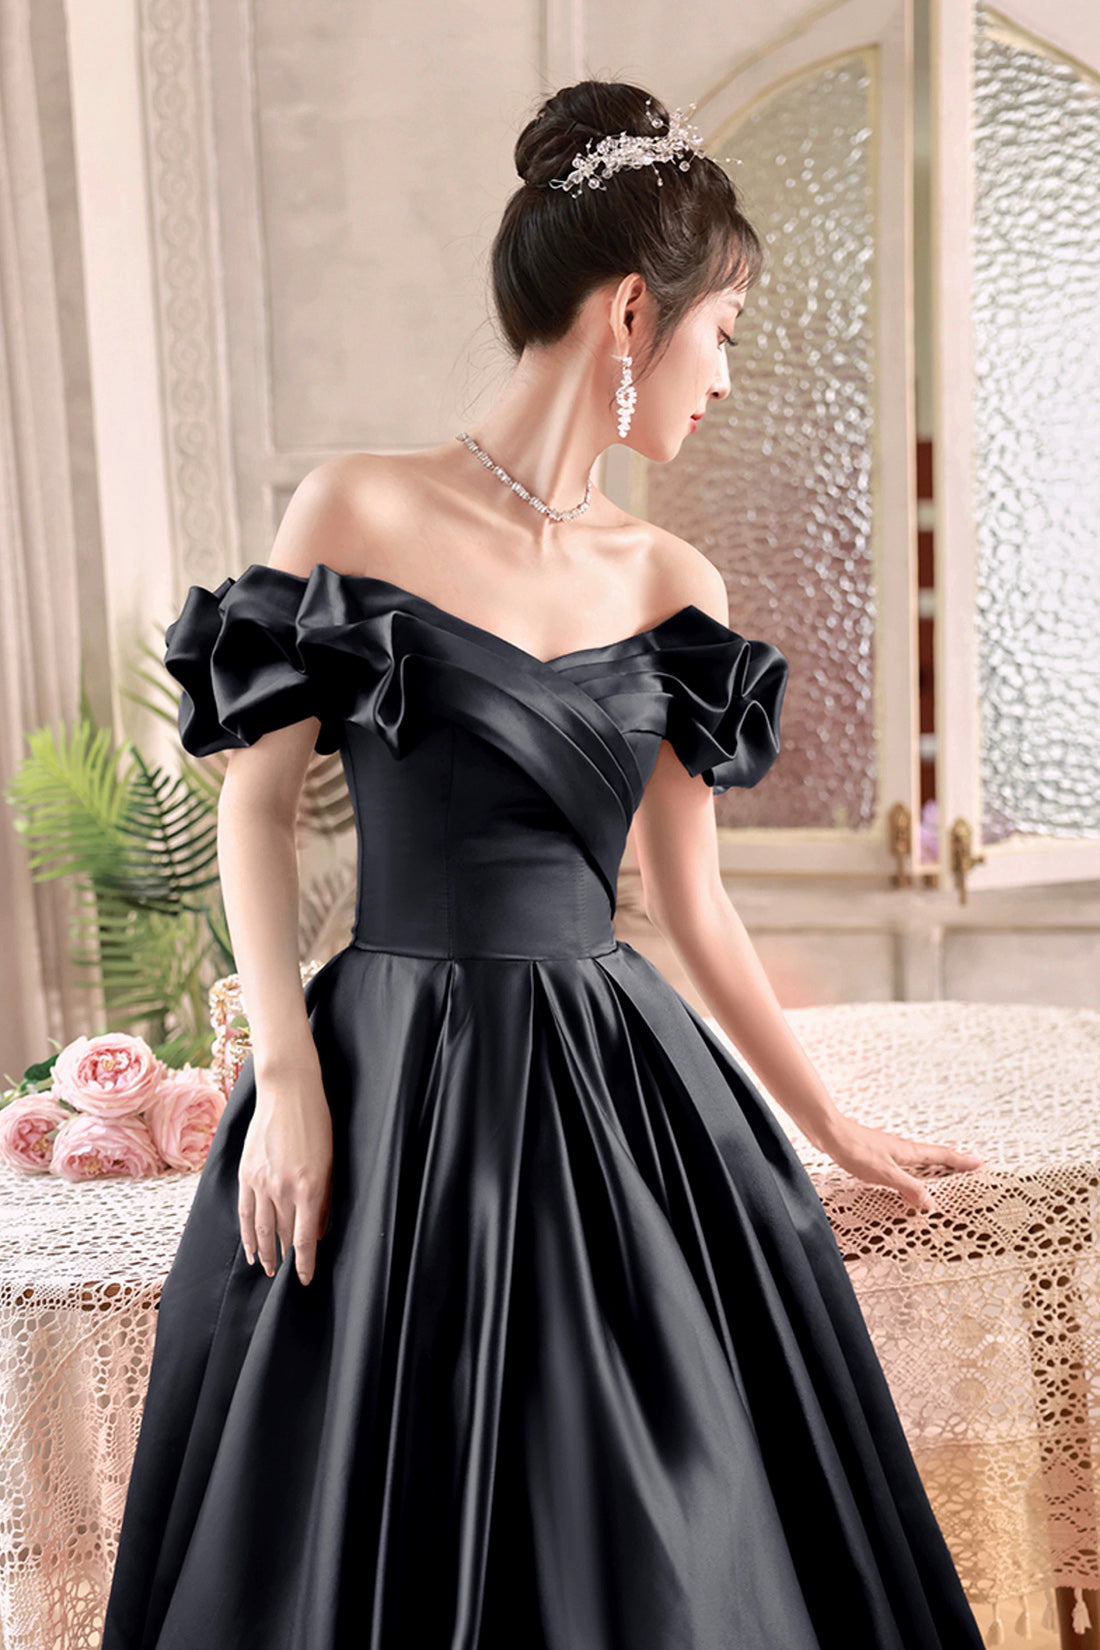 Black Prom Dresses